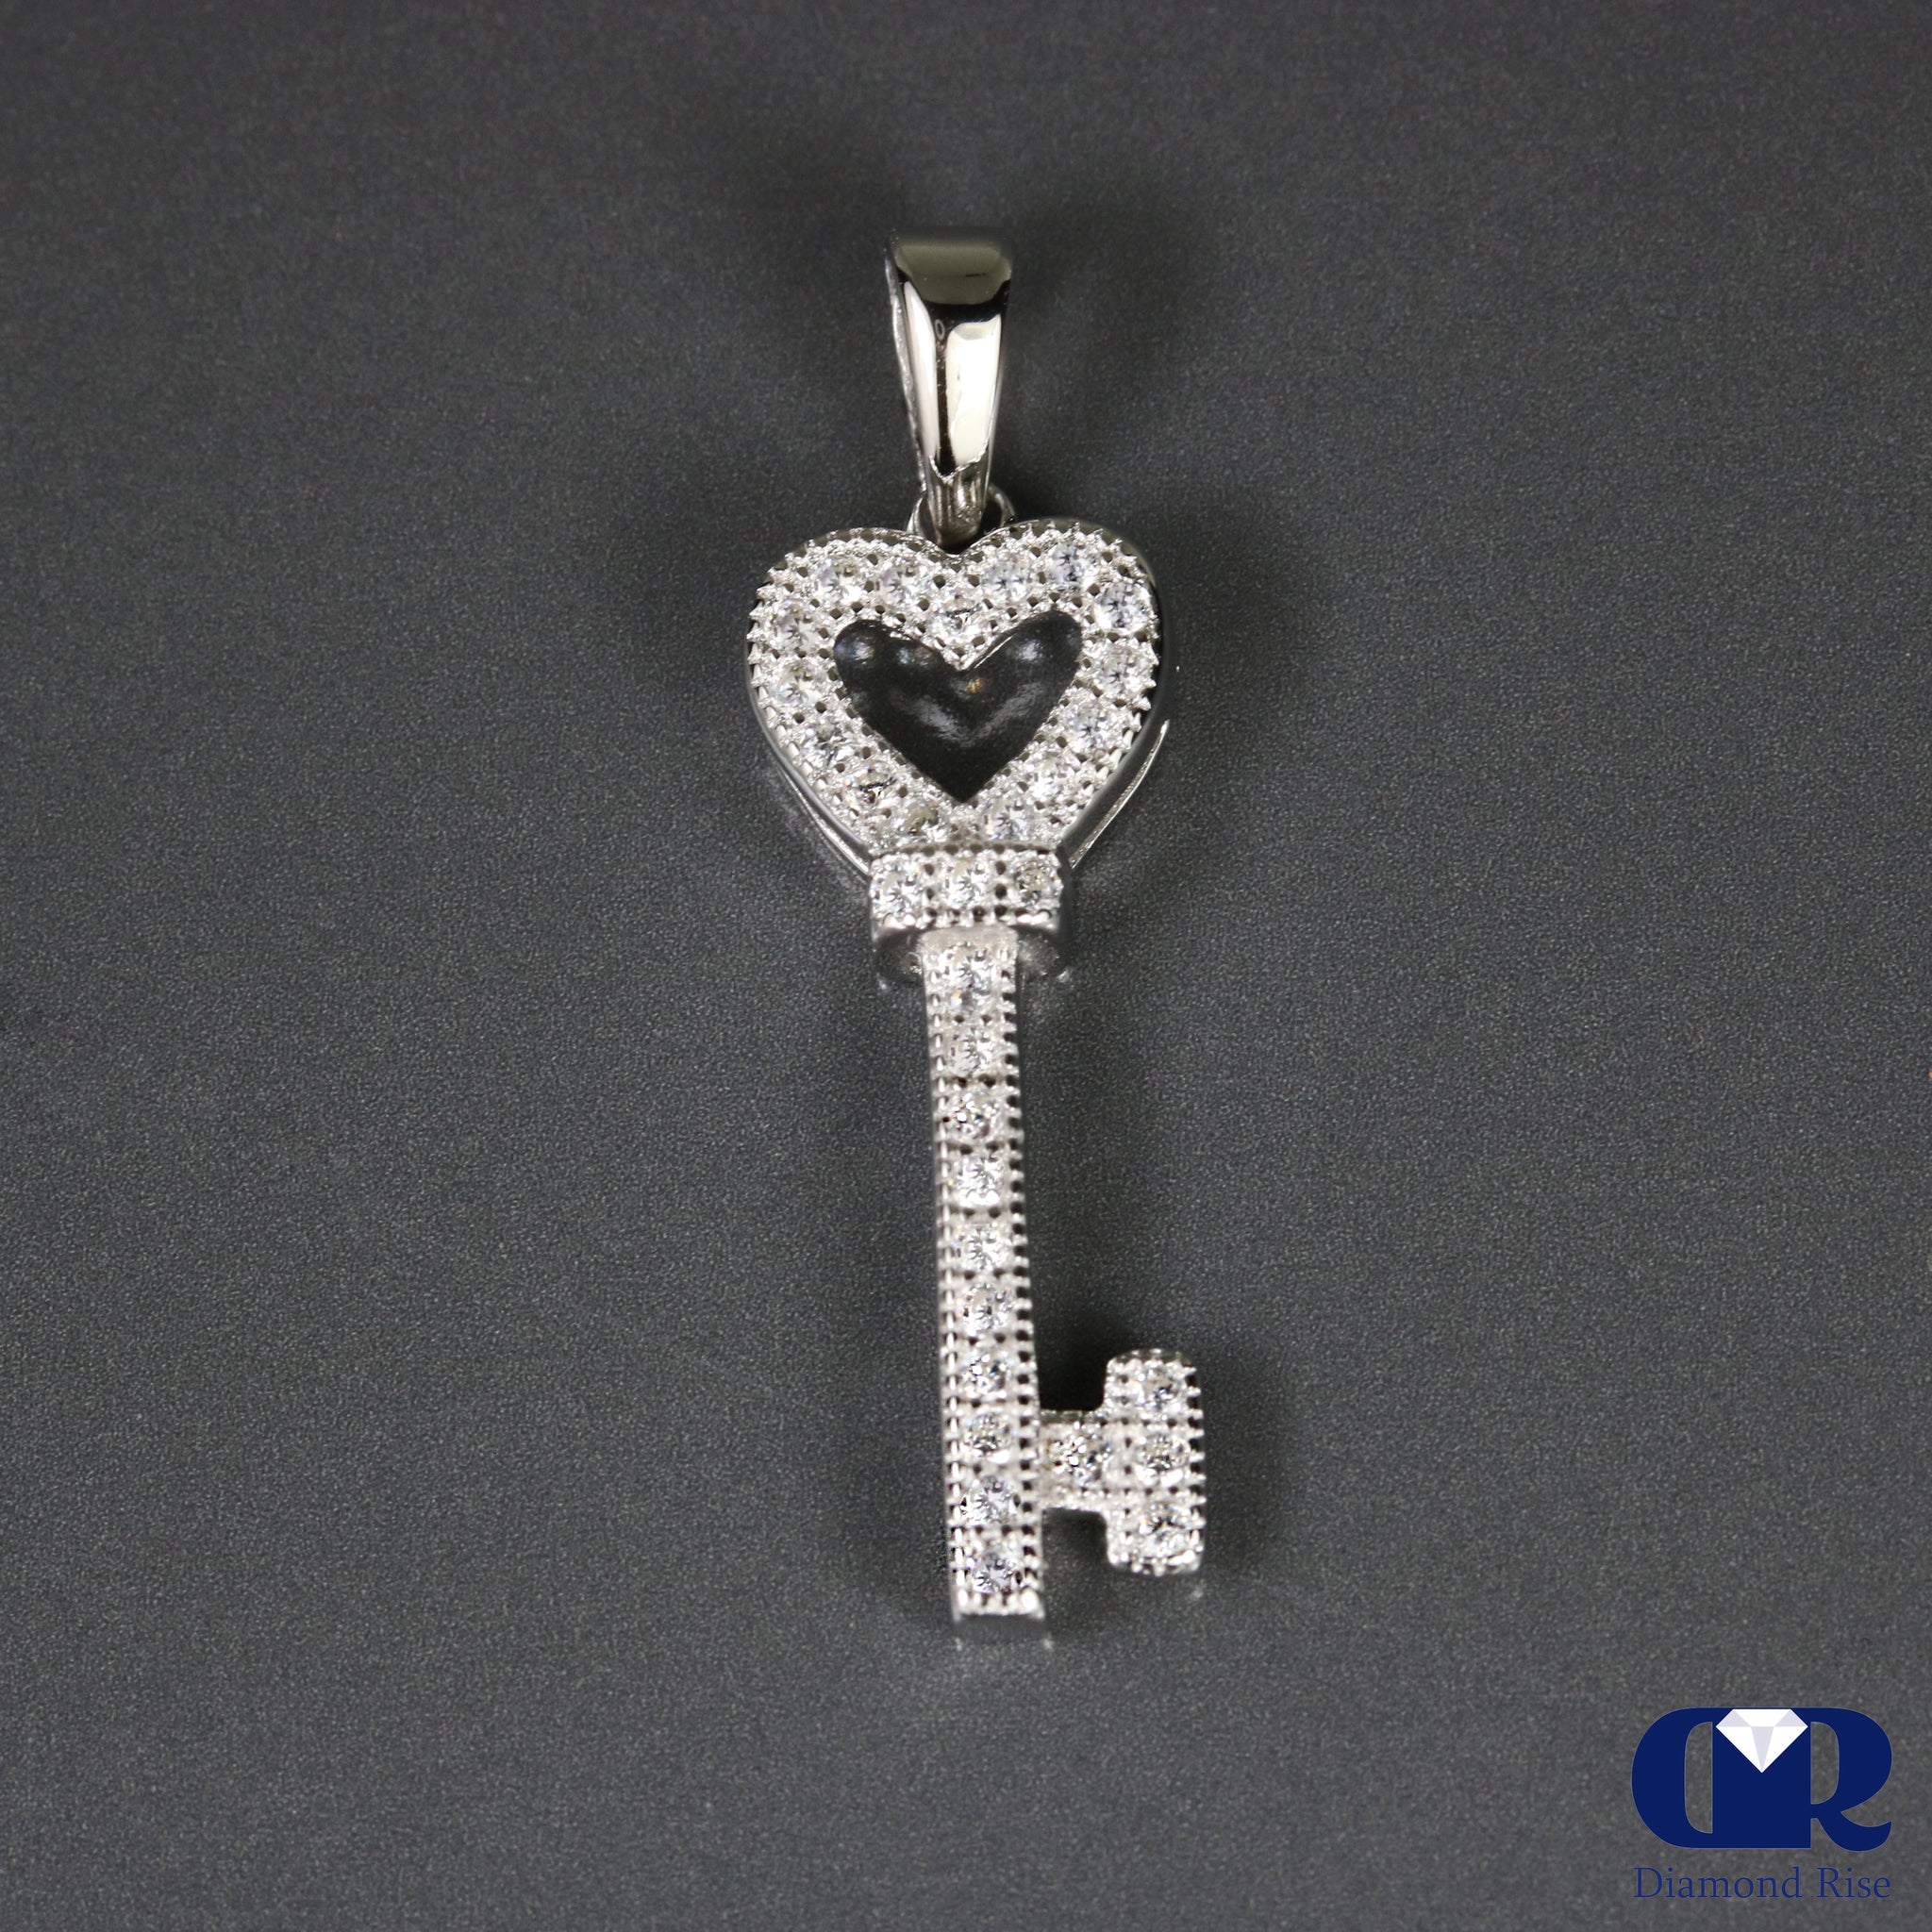 Gold Heart Key Necklace Open Heart Key Pendant 14K Gold 